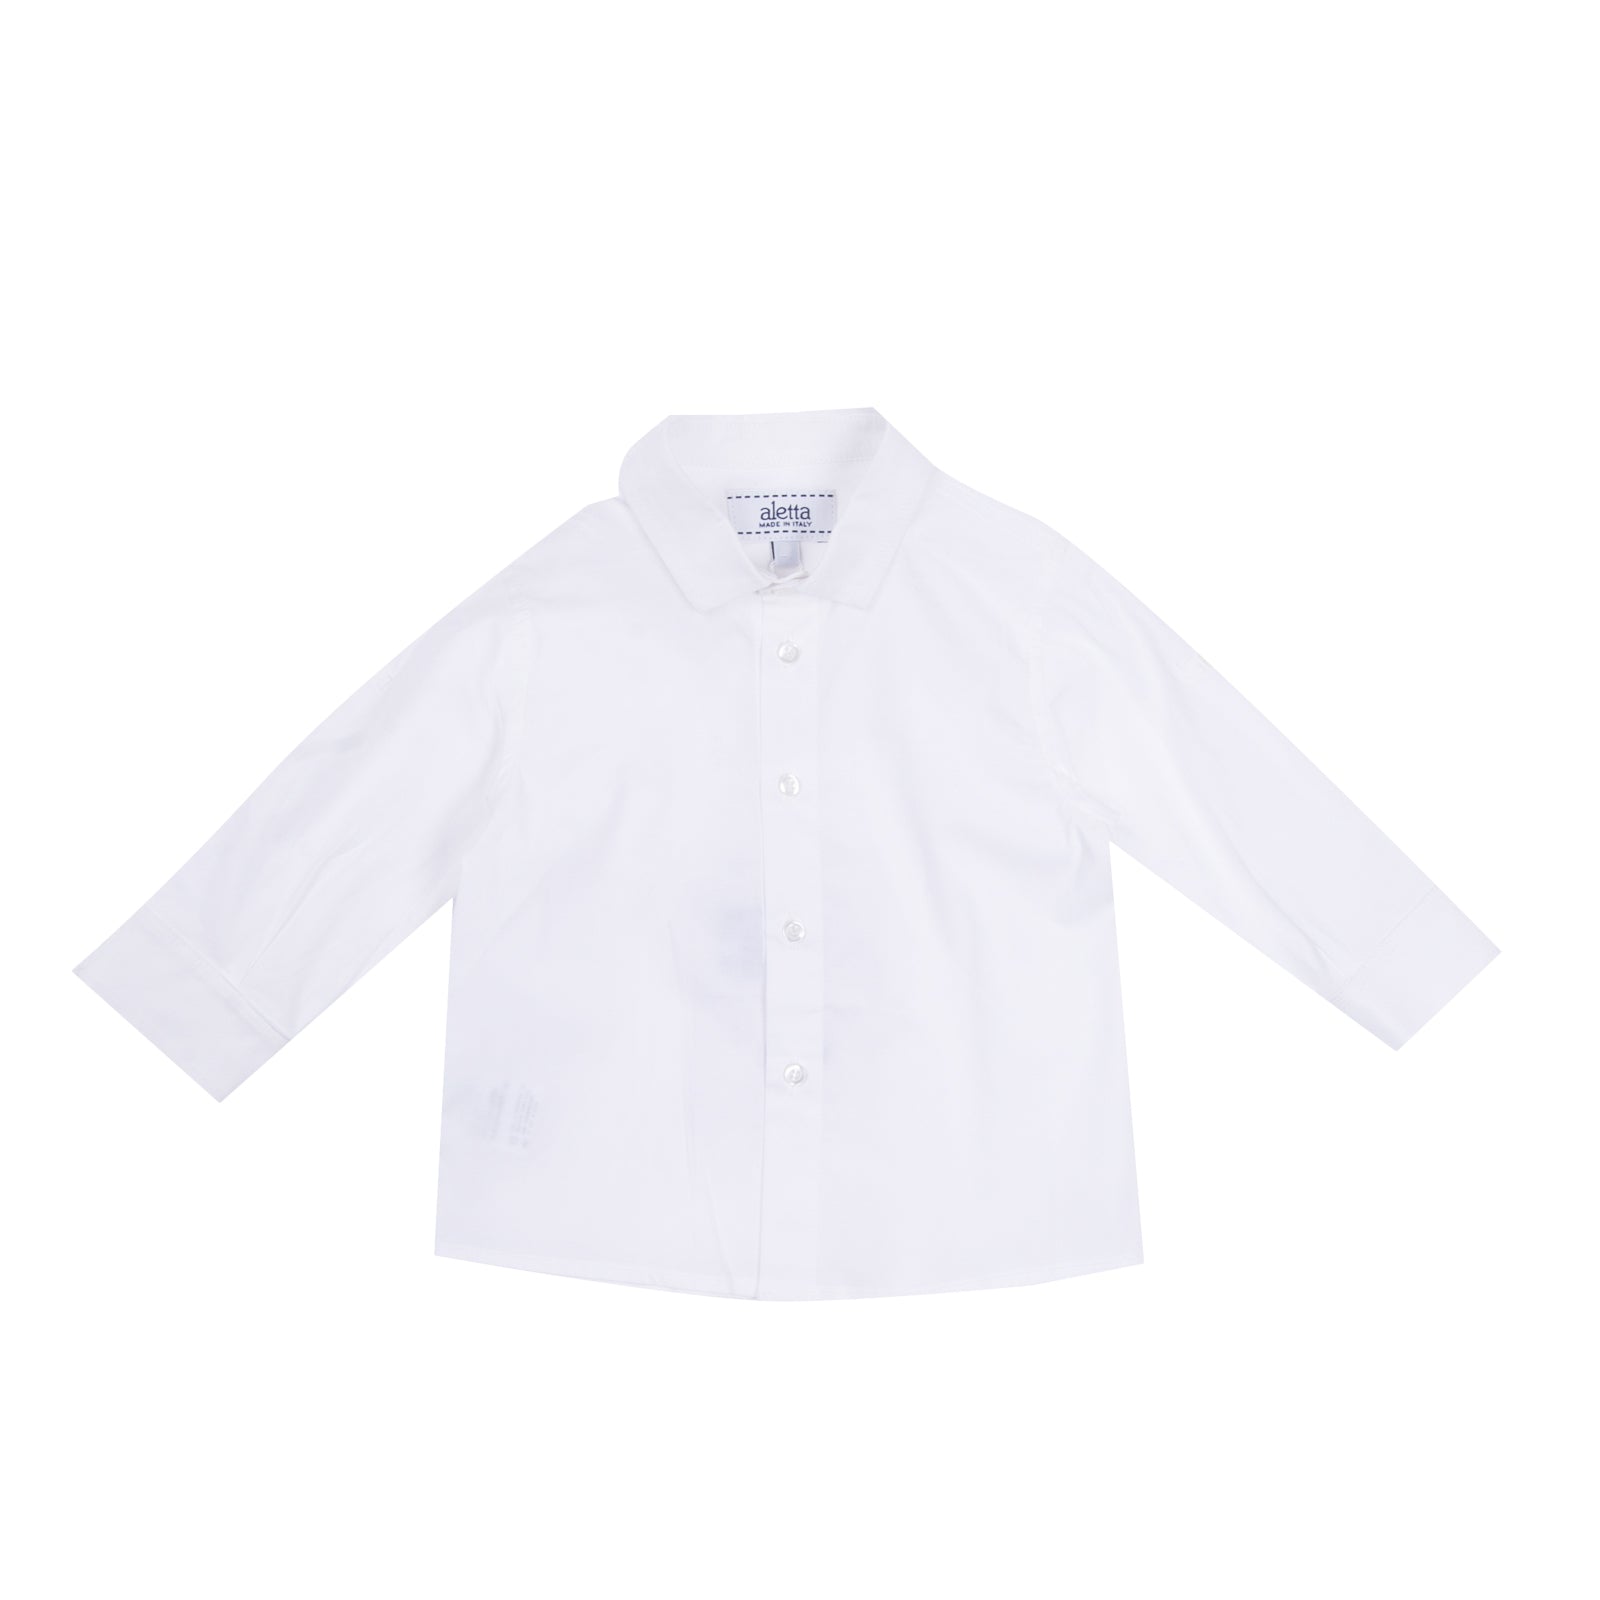 ALETTA Shirt Size 6M / 68CM White Turn-Up Cuffs Regular Collar Made in Italy gallery main photo